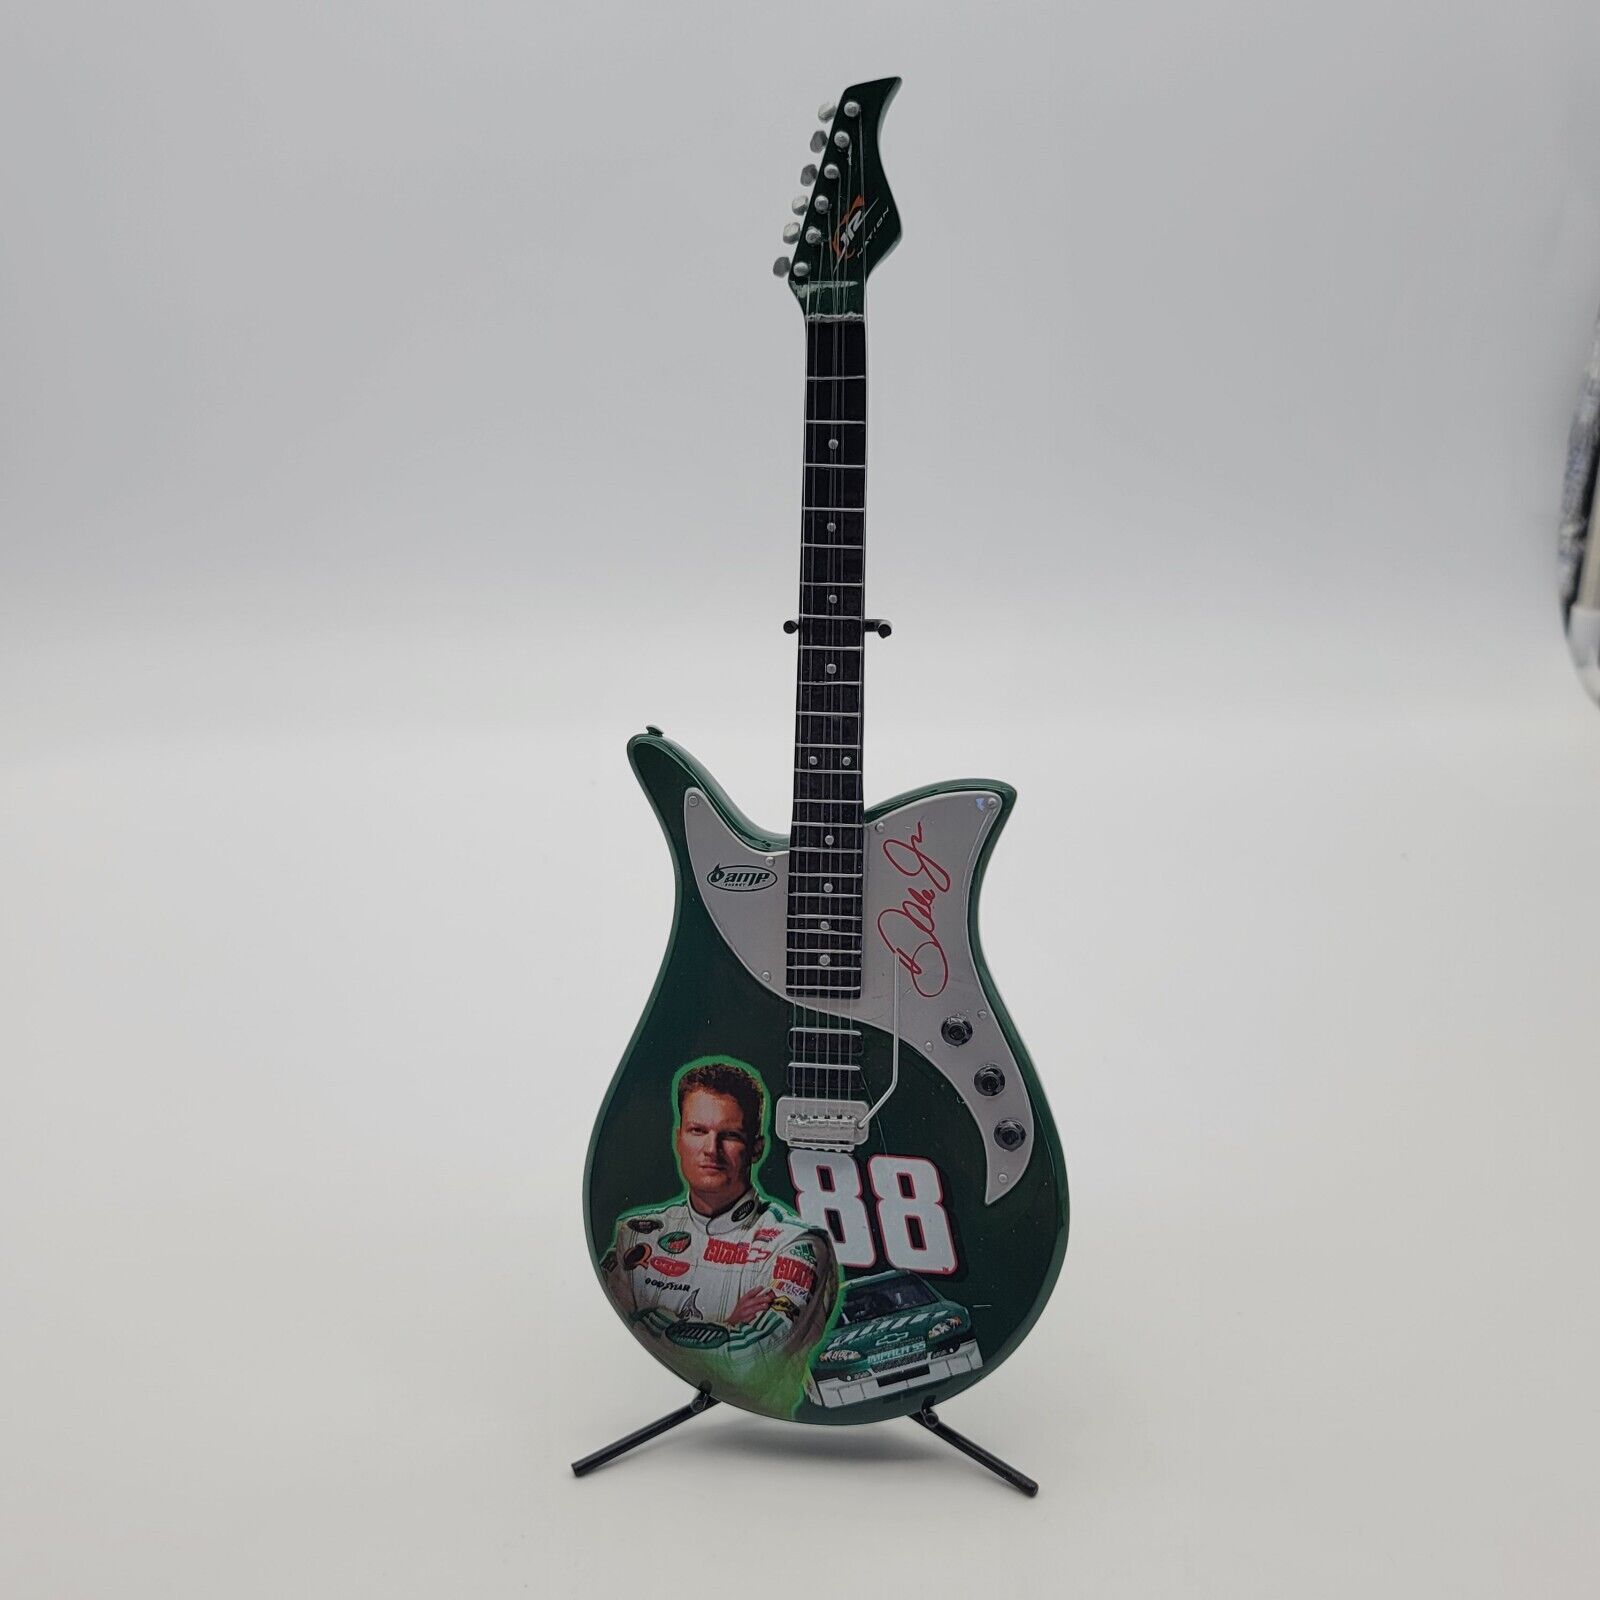 Hamilton Collection Dale Earnhardt Jr. AMP Energy Miniature Guitar 23 Nascar